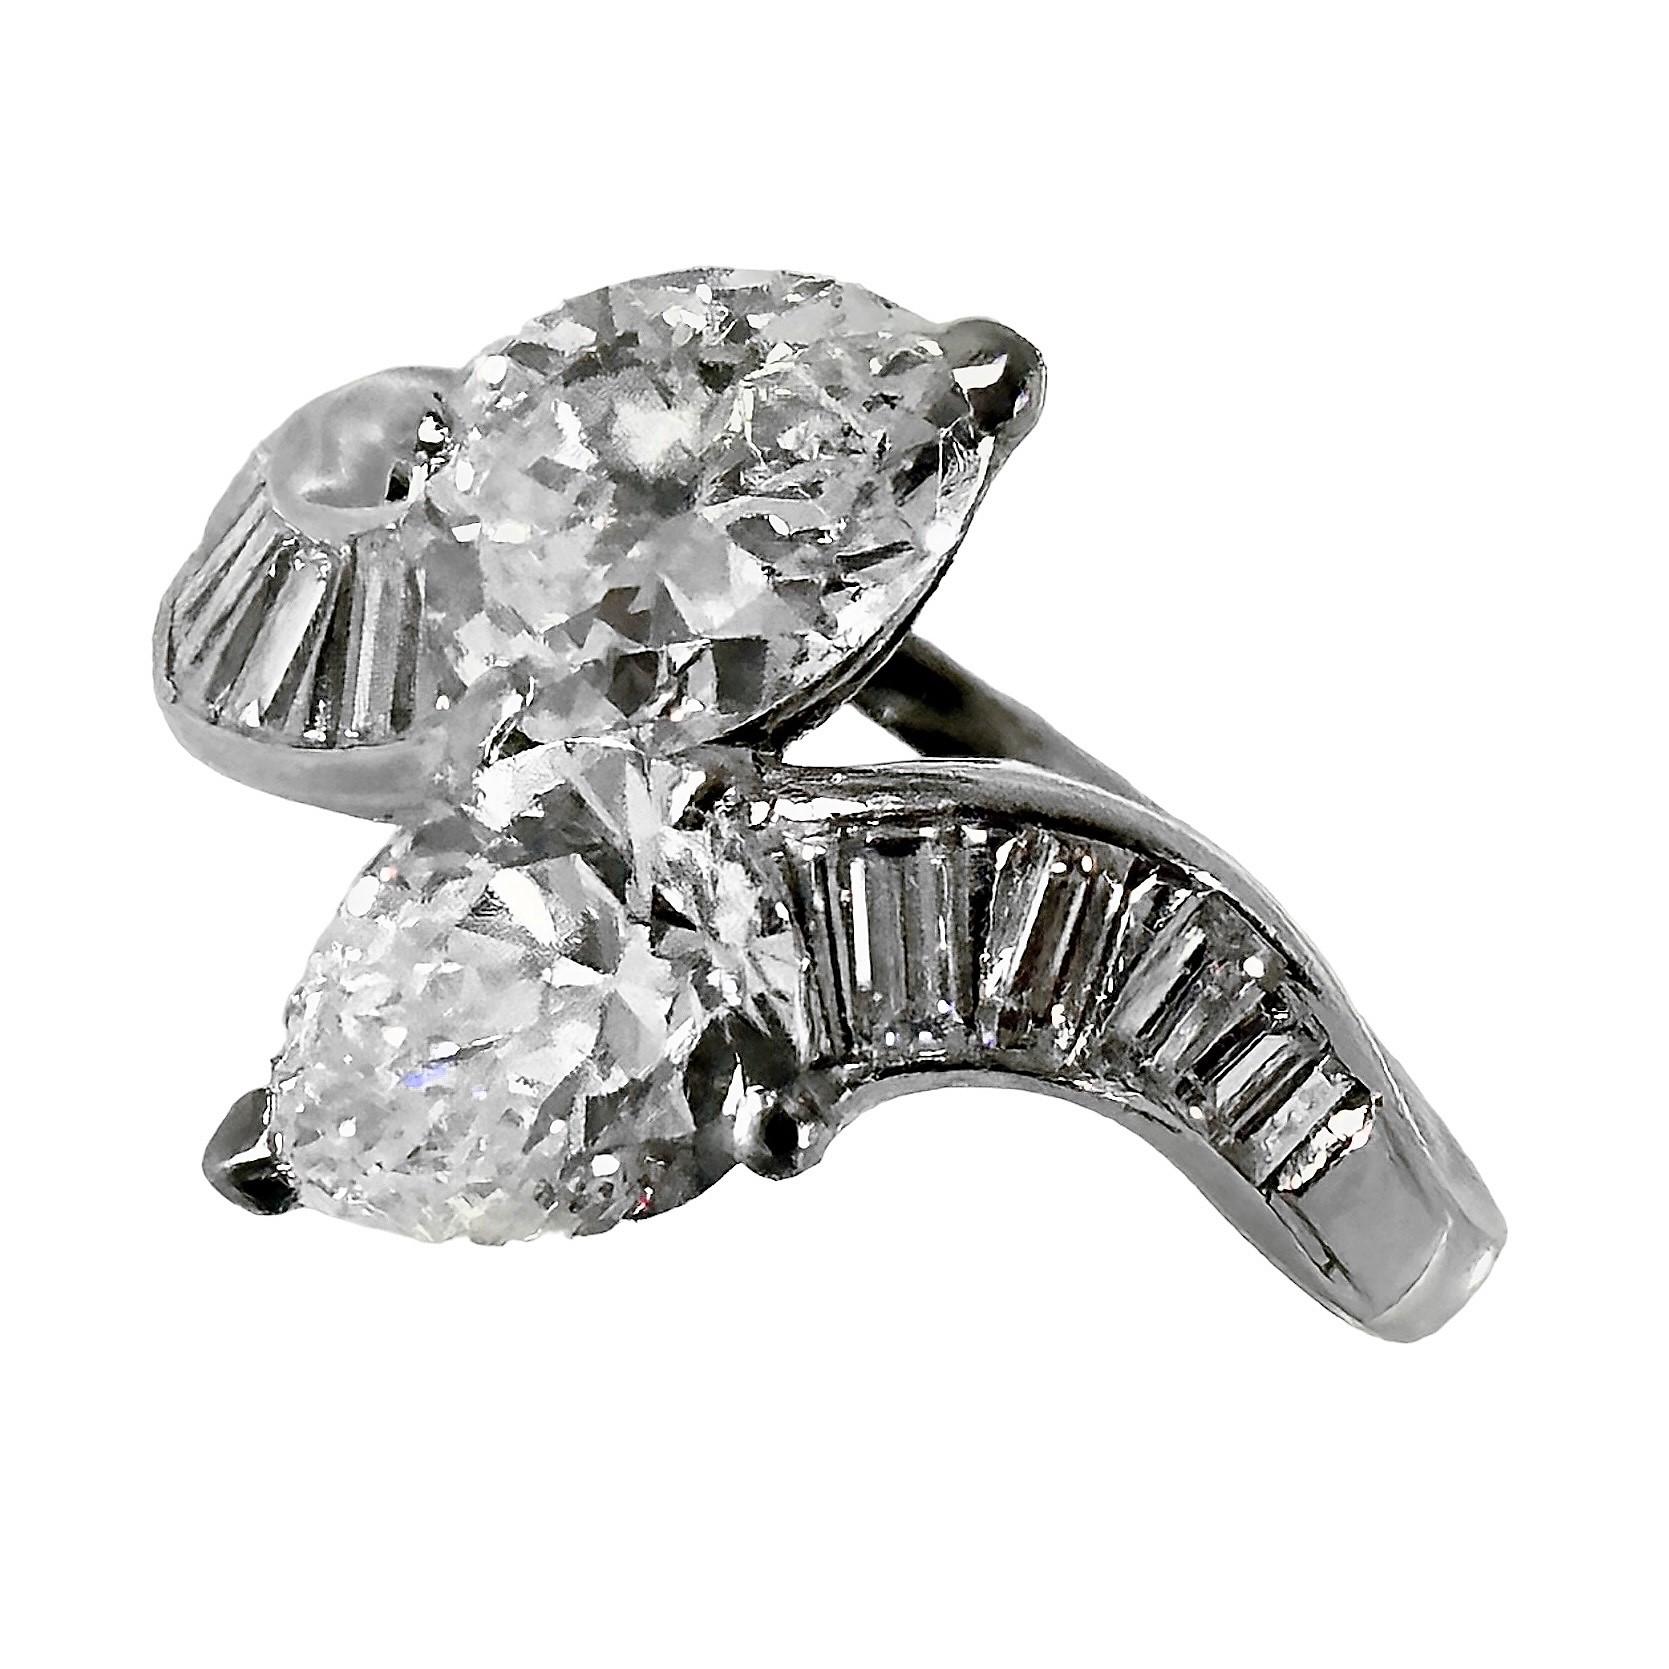 Women's Elegant Mid-20th Century Bypass Ring of E Color VS1 Clarity Pear Shape Diamonds